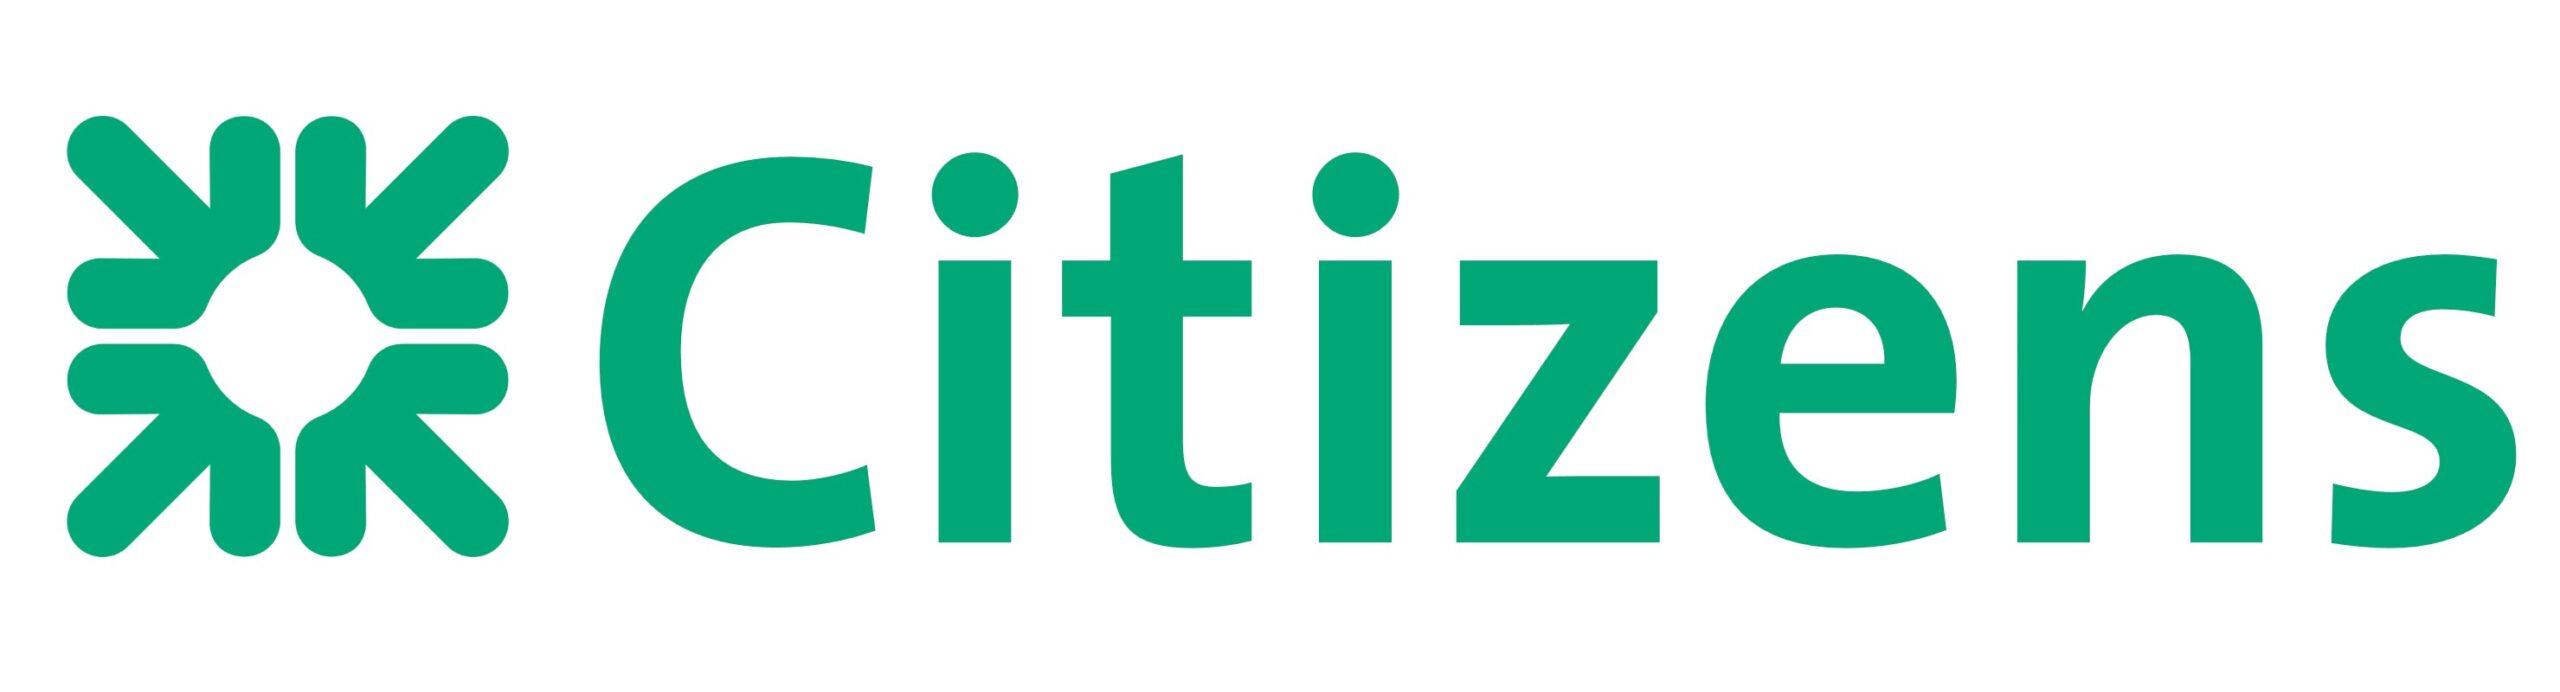 citizens bank logo - j malden center retail 